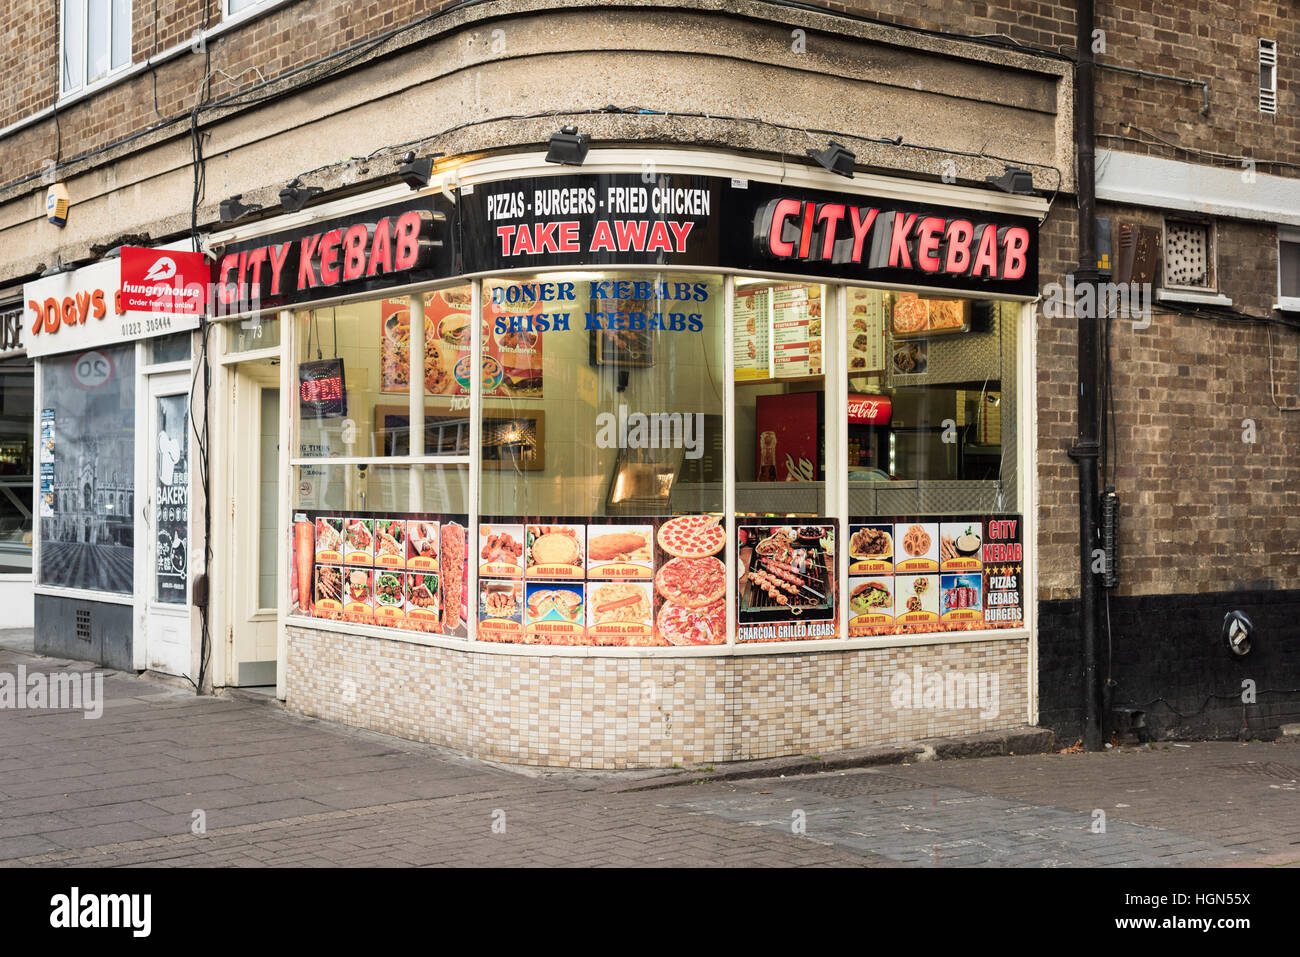 La Ville kebab fast food restaurant takeway et dans Regent Street Cambridge UK Banque D'Images